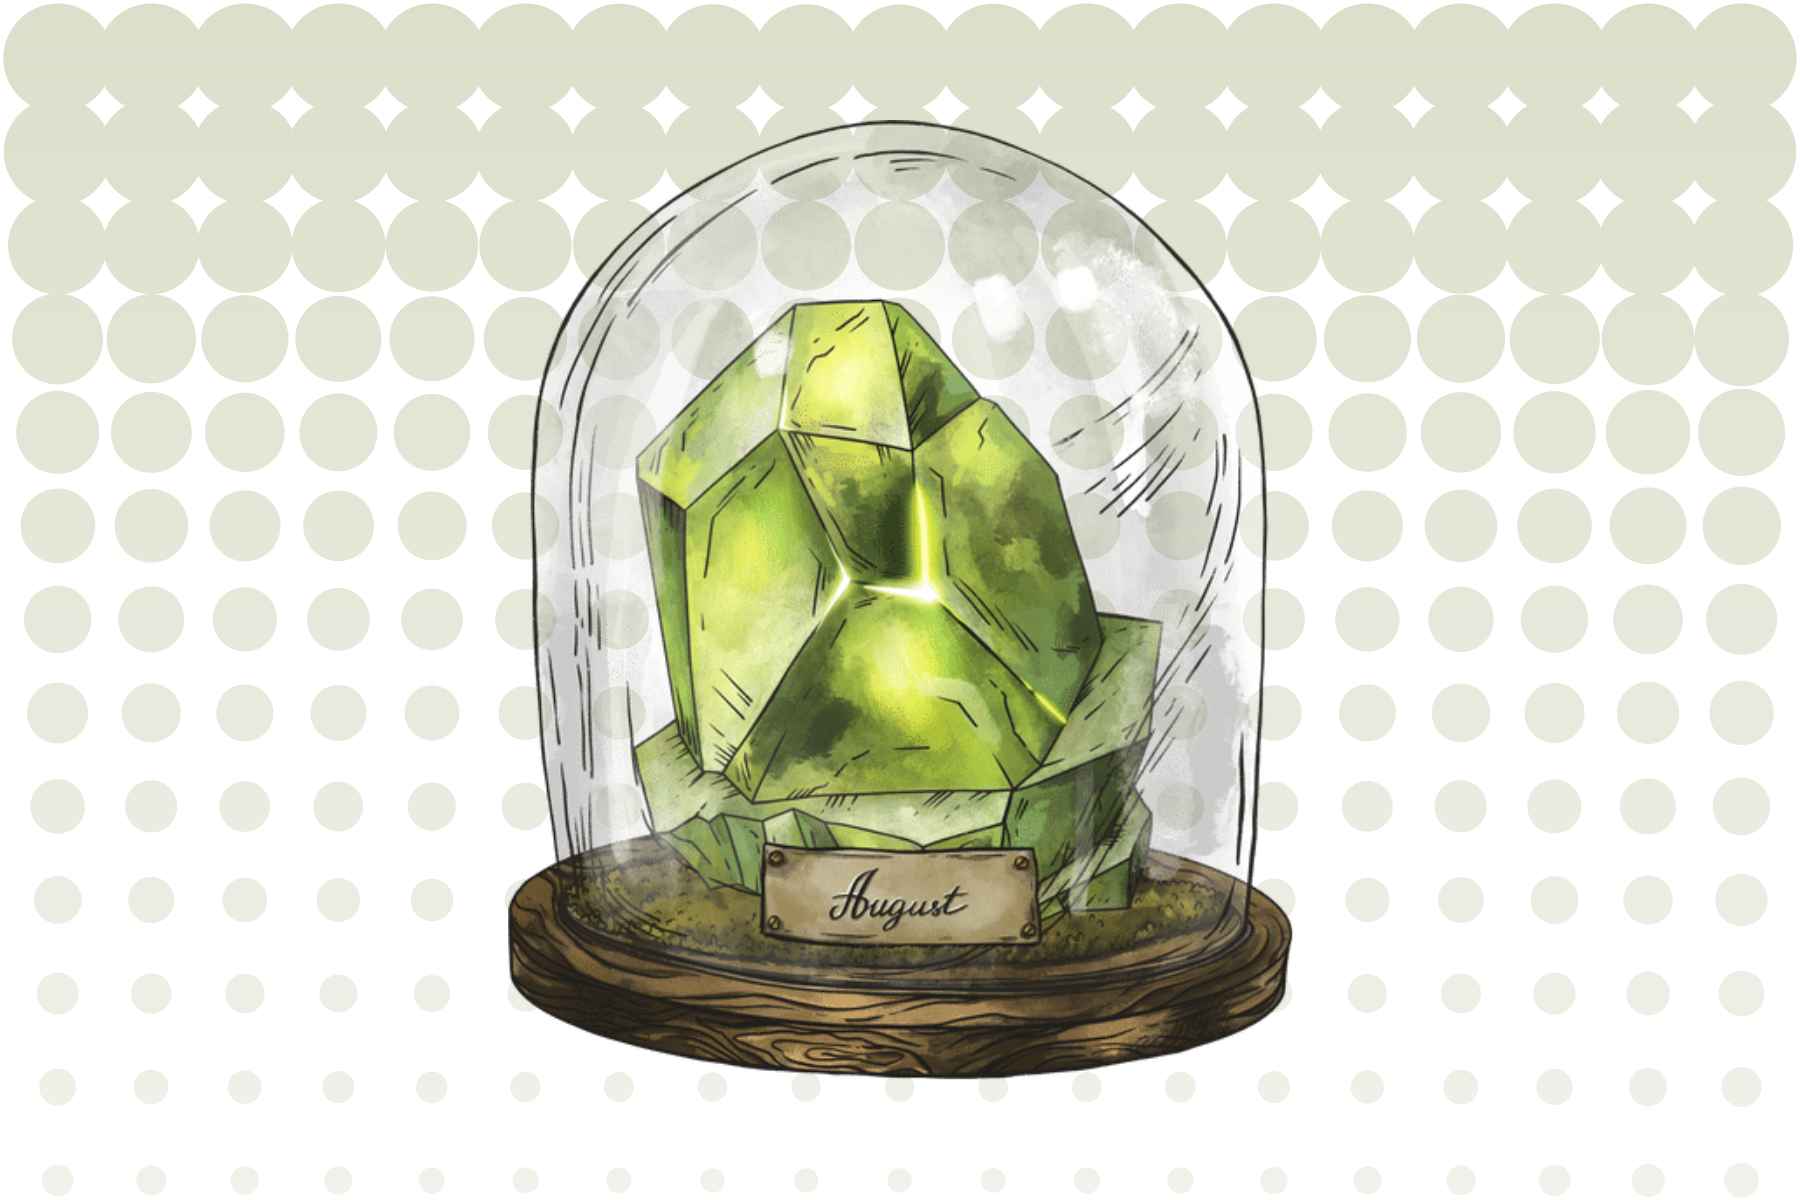 Peridot stone inside a glass jar